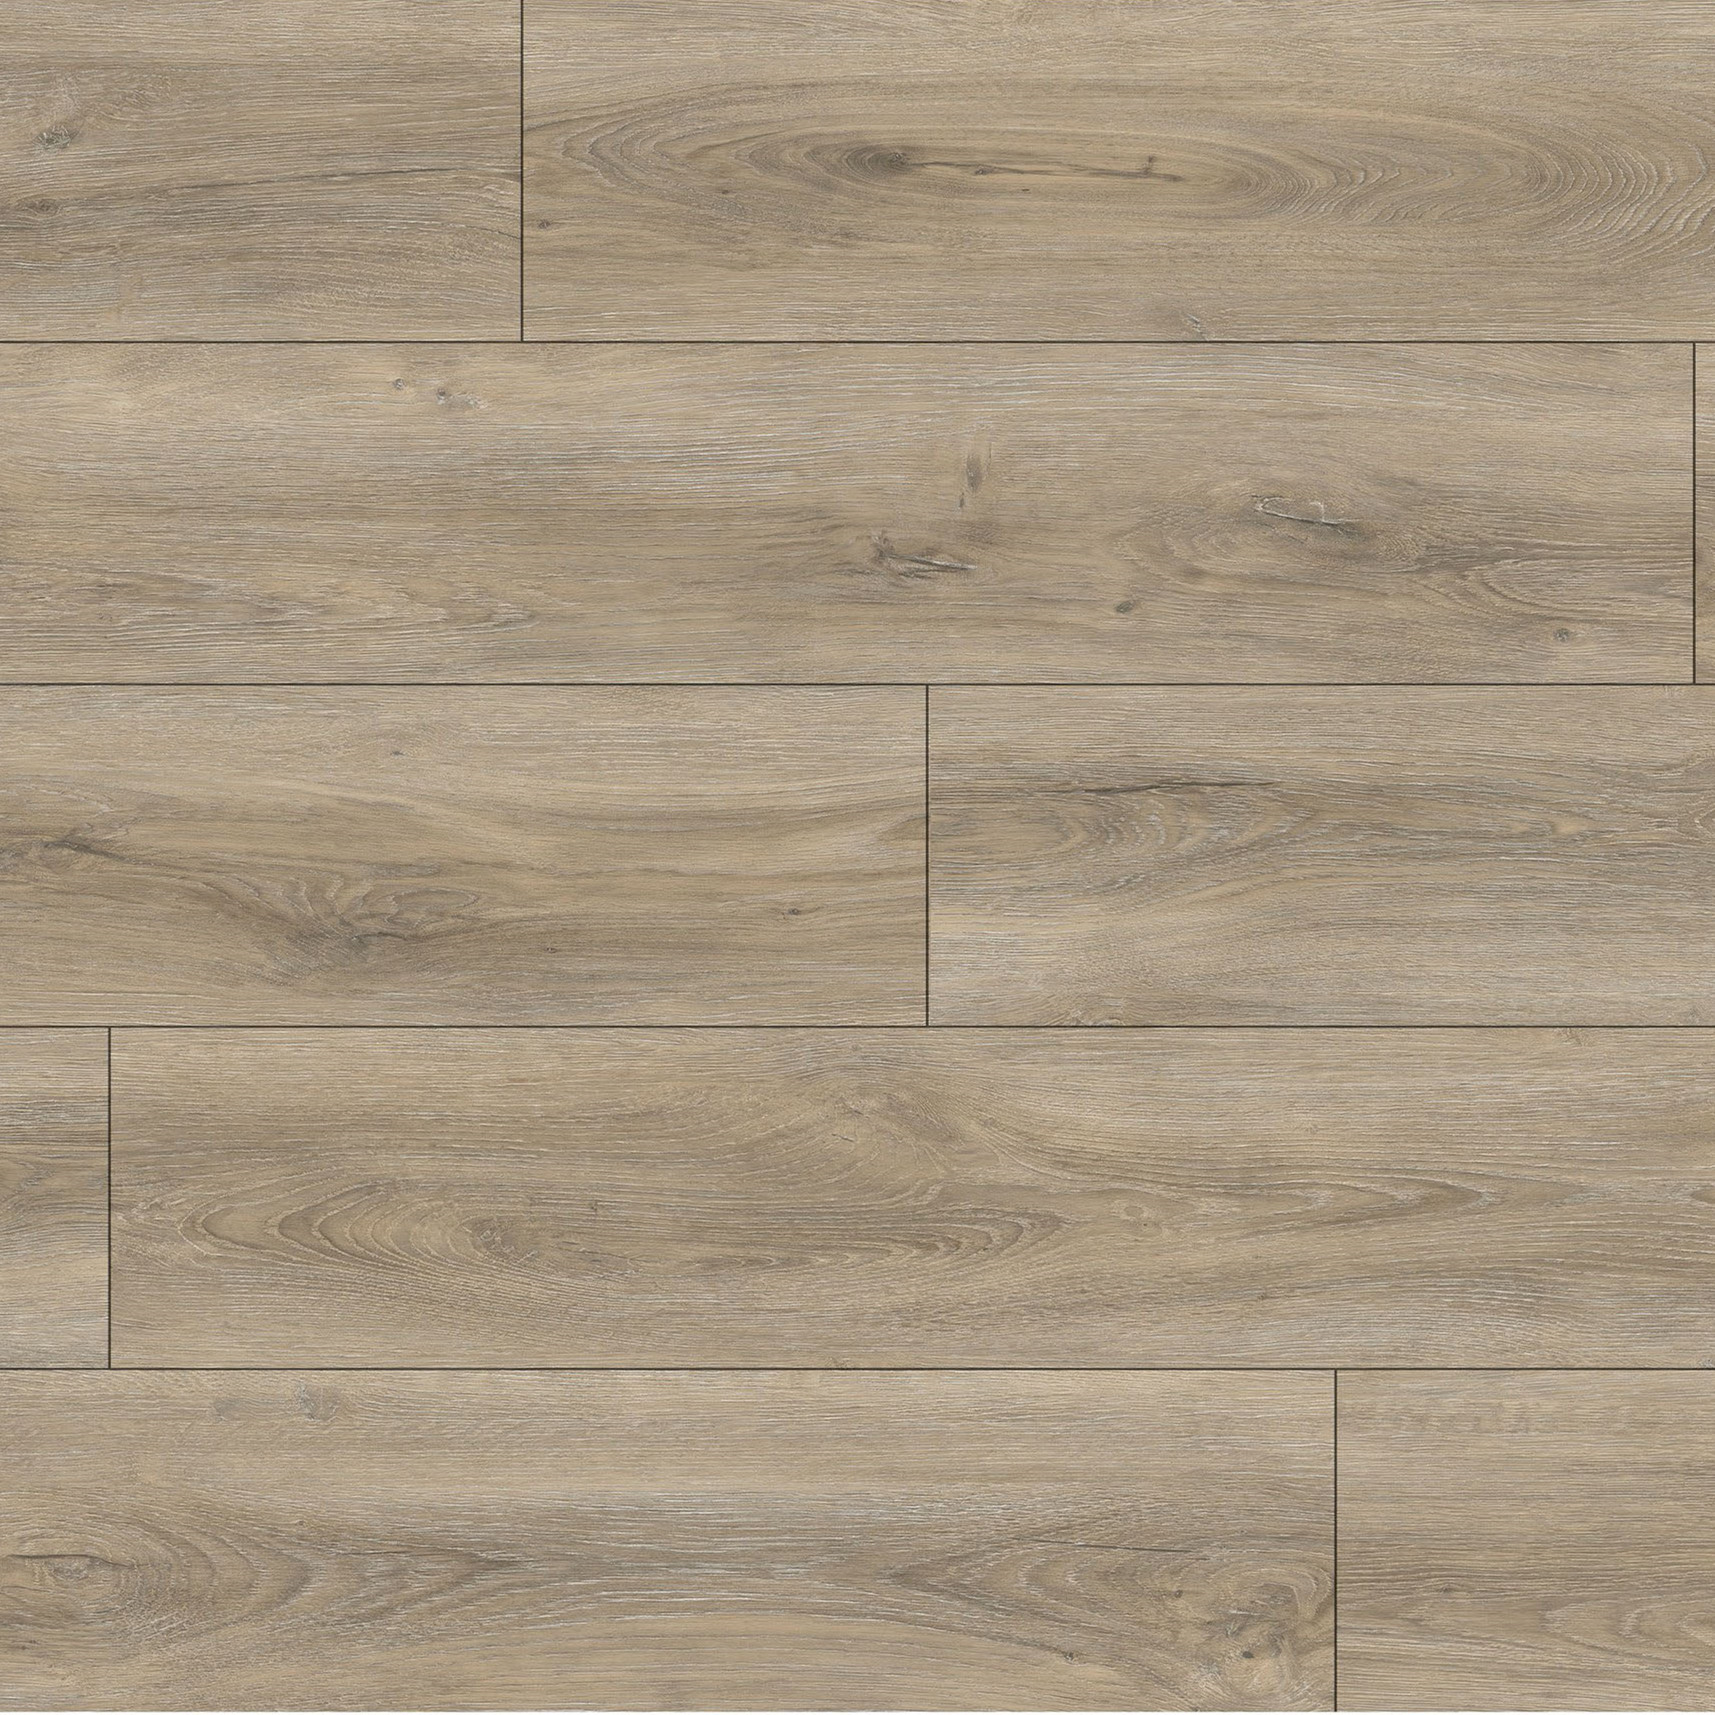 Trending Products Sprung Timber Floor -
 Kangton Natural Oak Rigid SPC Flooring with Cheap Price – Kangton